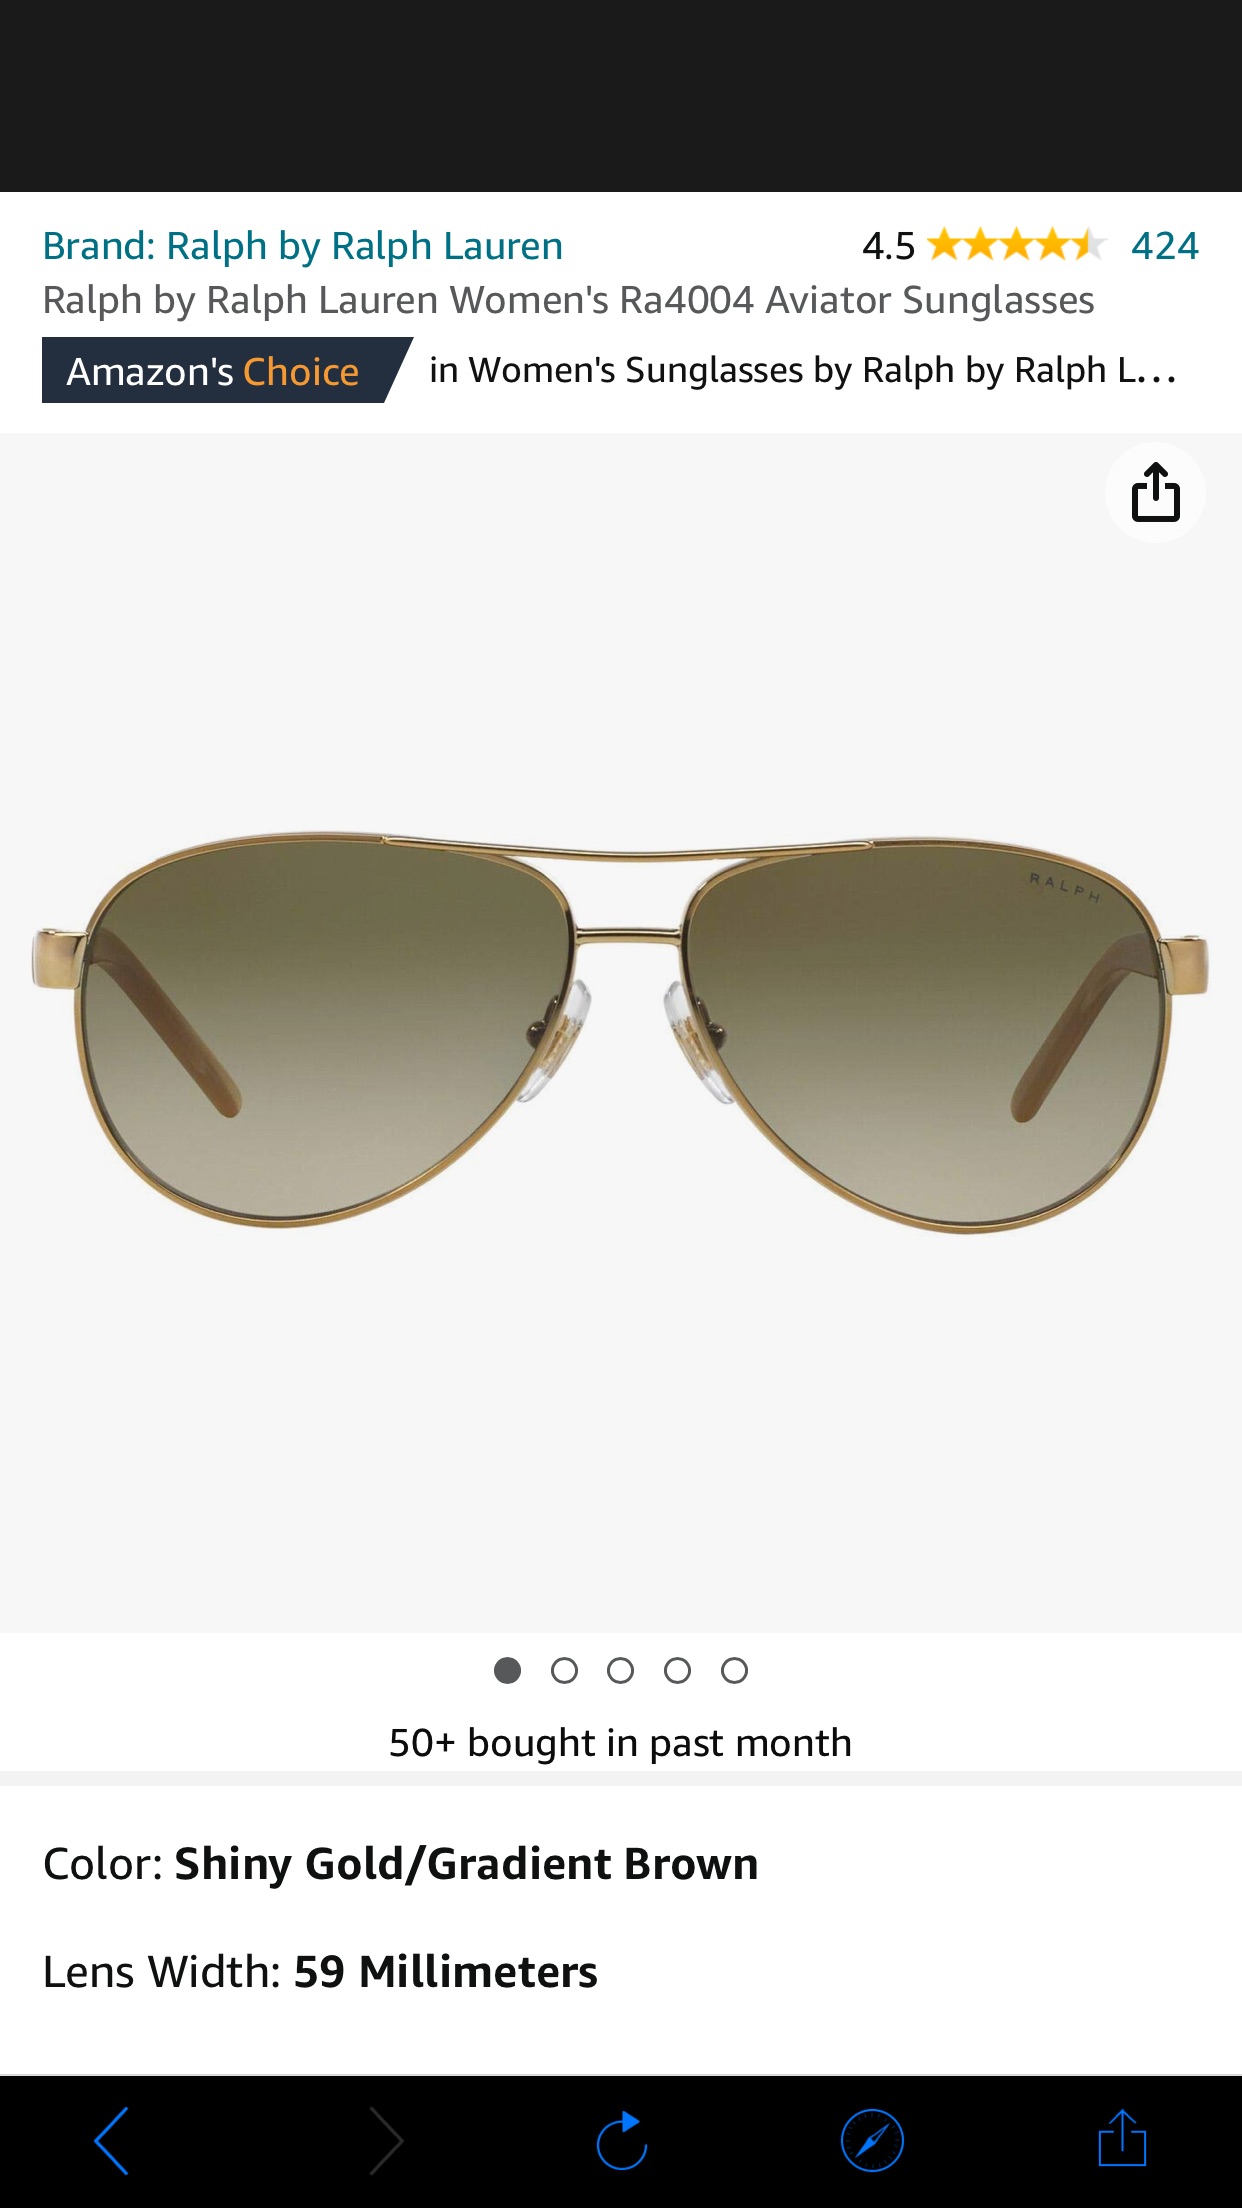 Amazon.com: Ralph by Ralph Lauren Women's RA4004 Aviator Sunglasses, Shiny Gold/Gradient Brown, 59 mm